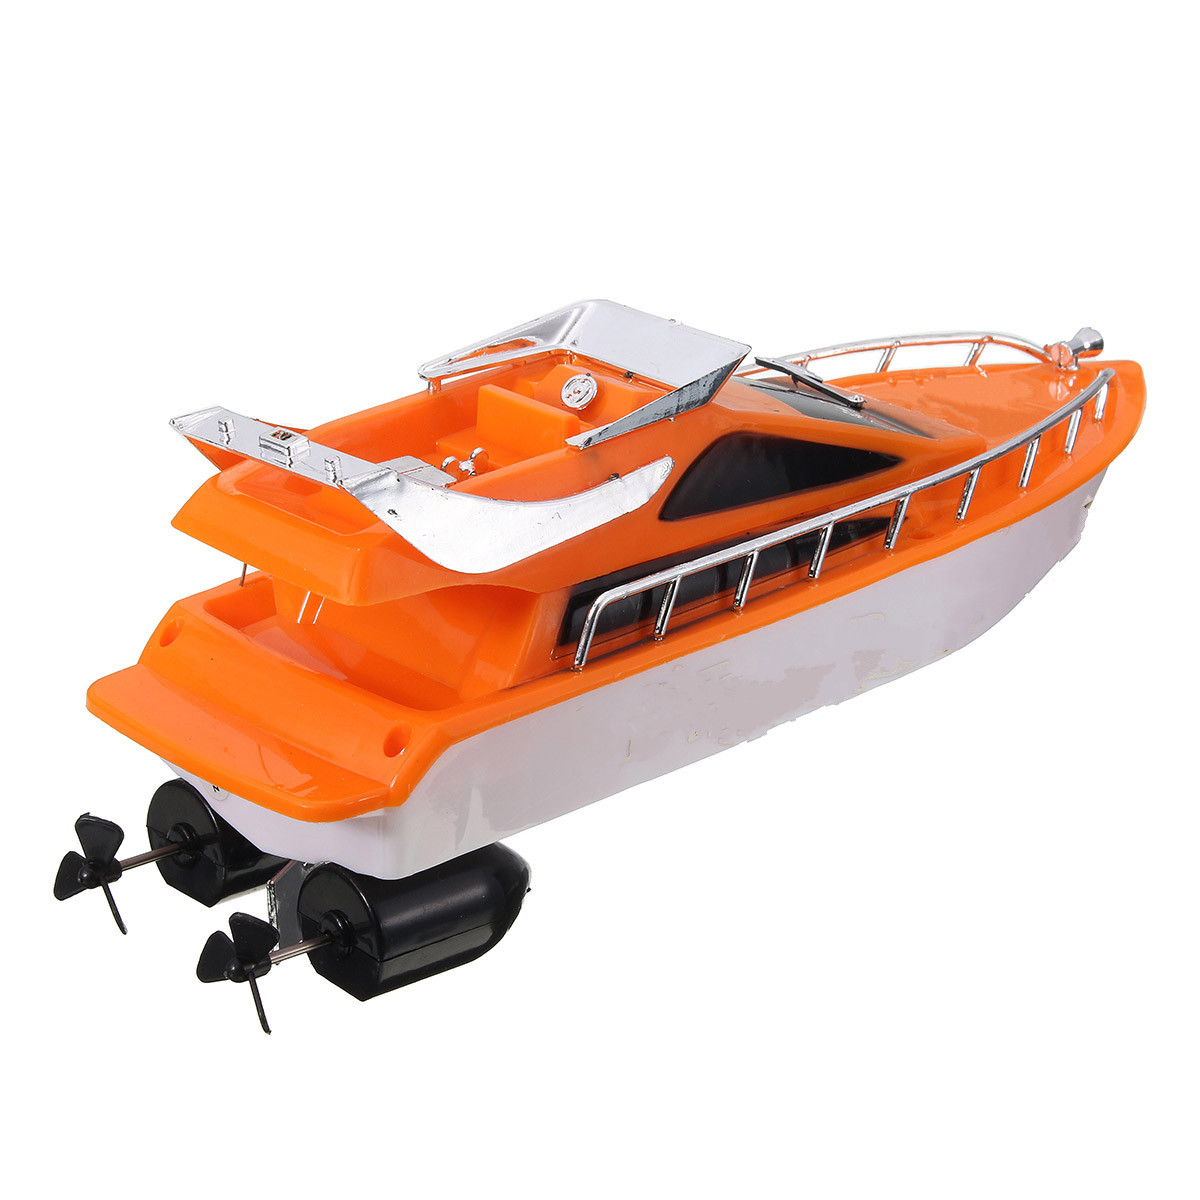 26x75x9cm-Orange-Plastic-Electric-Remote-Control-Kid-Chirdren-Toy-Speed-Boat-1104283